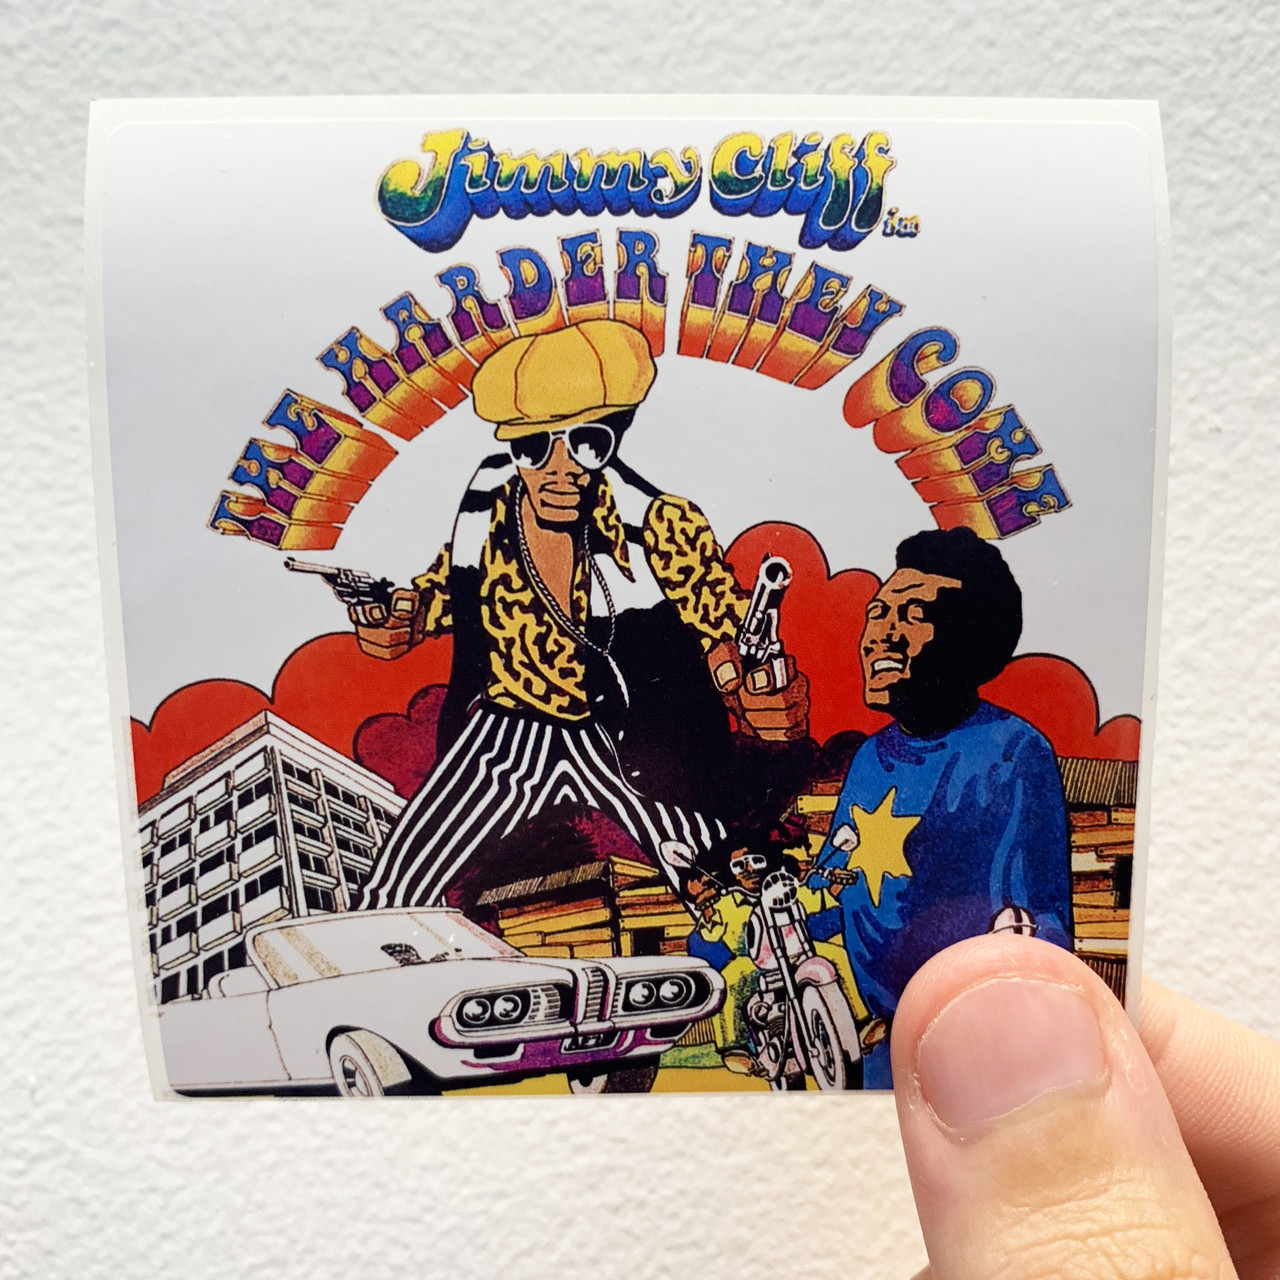 Jimmy Cliff The Harder They Come Album Cover Sticker Original Soundtrack